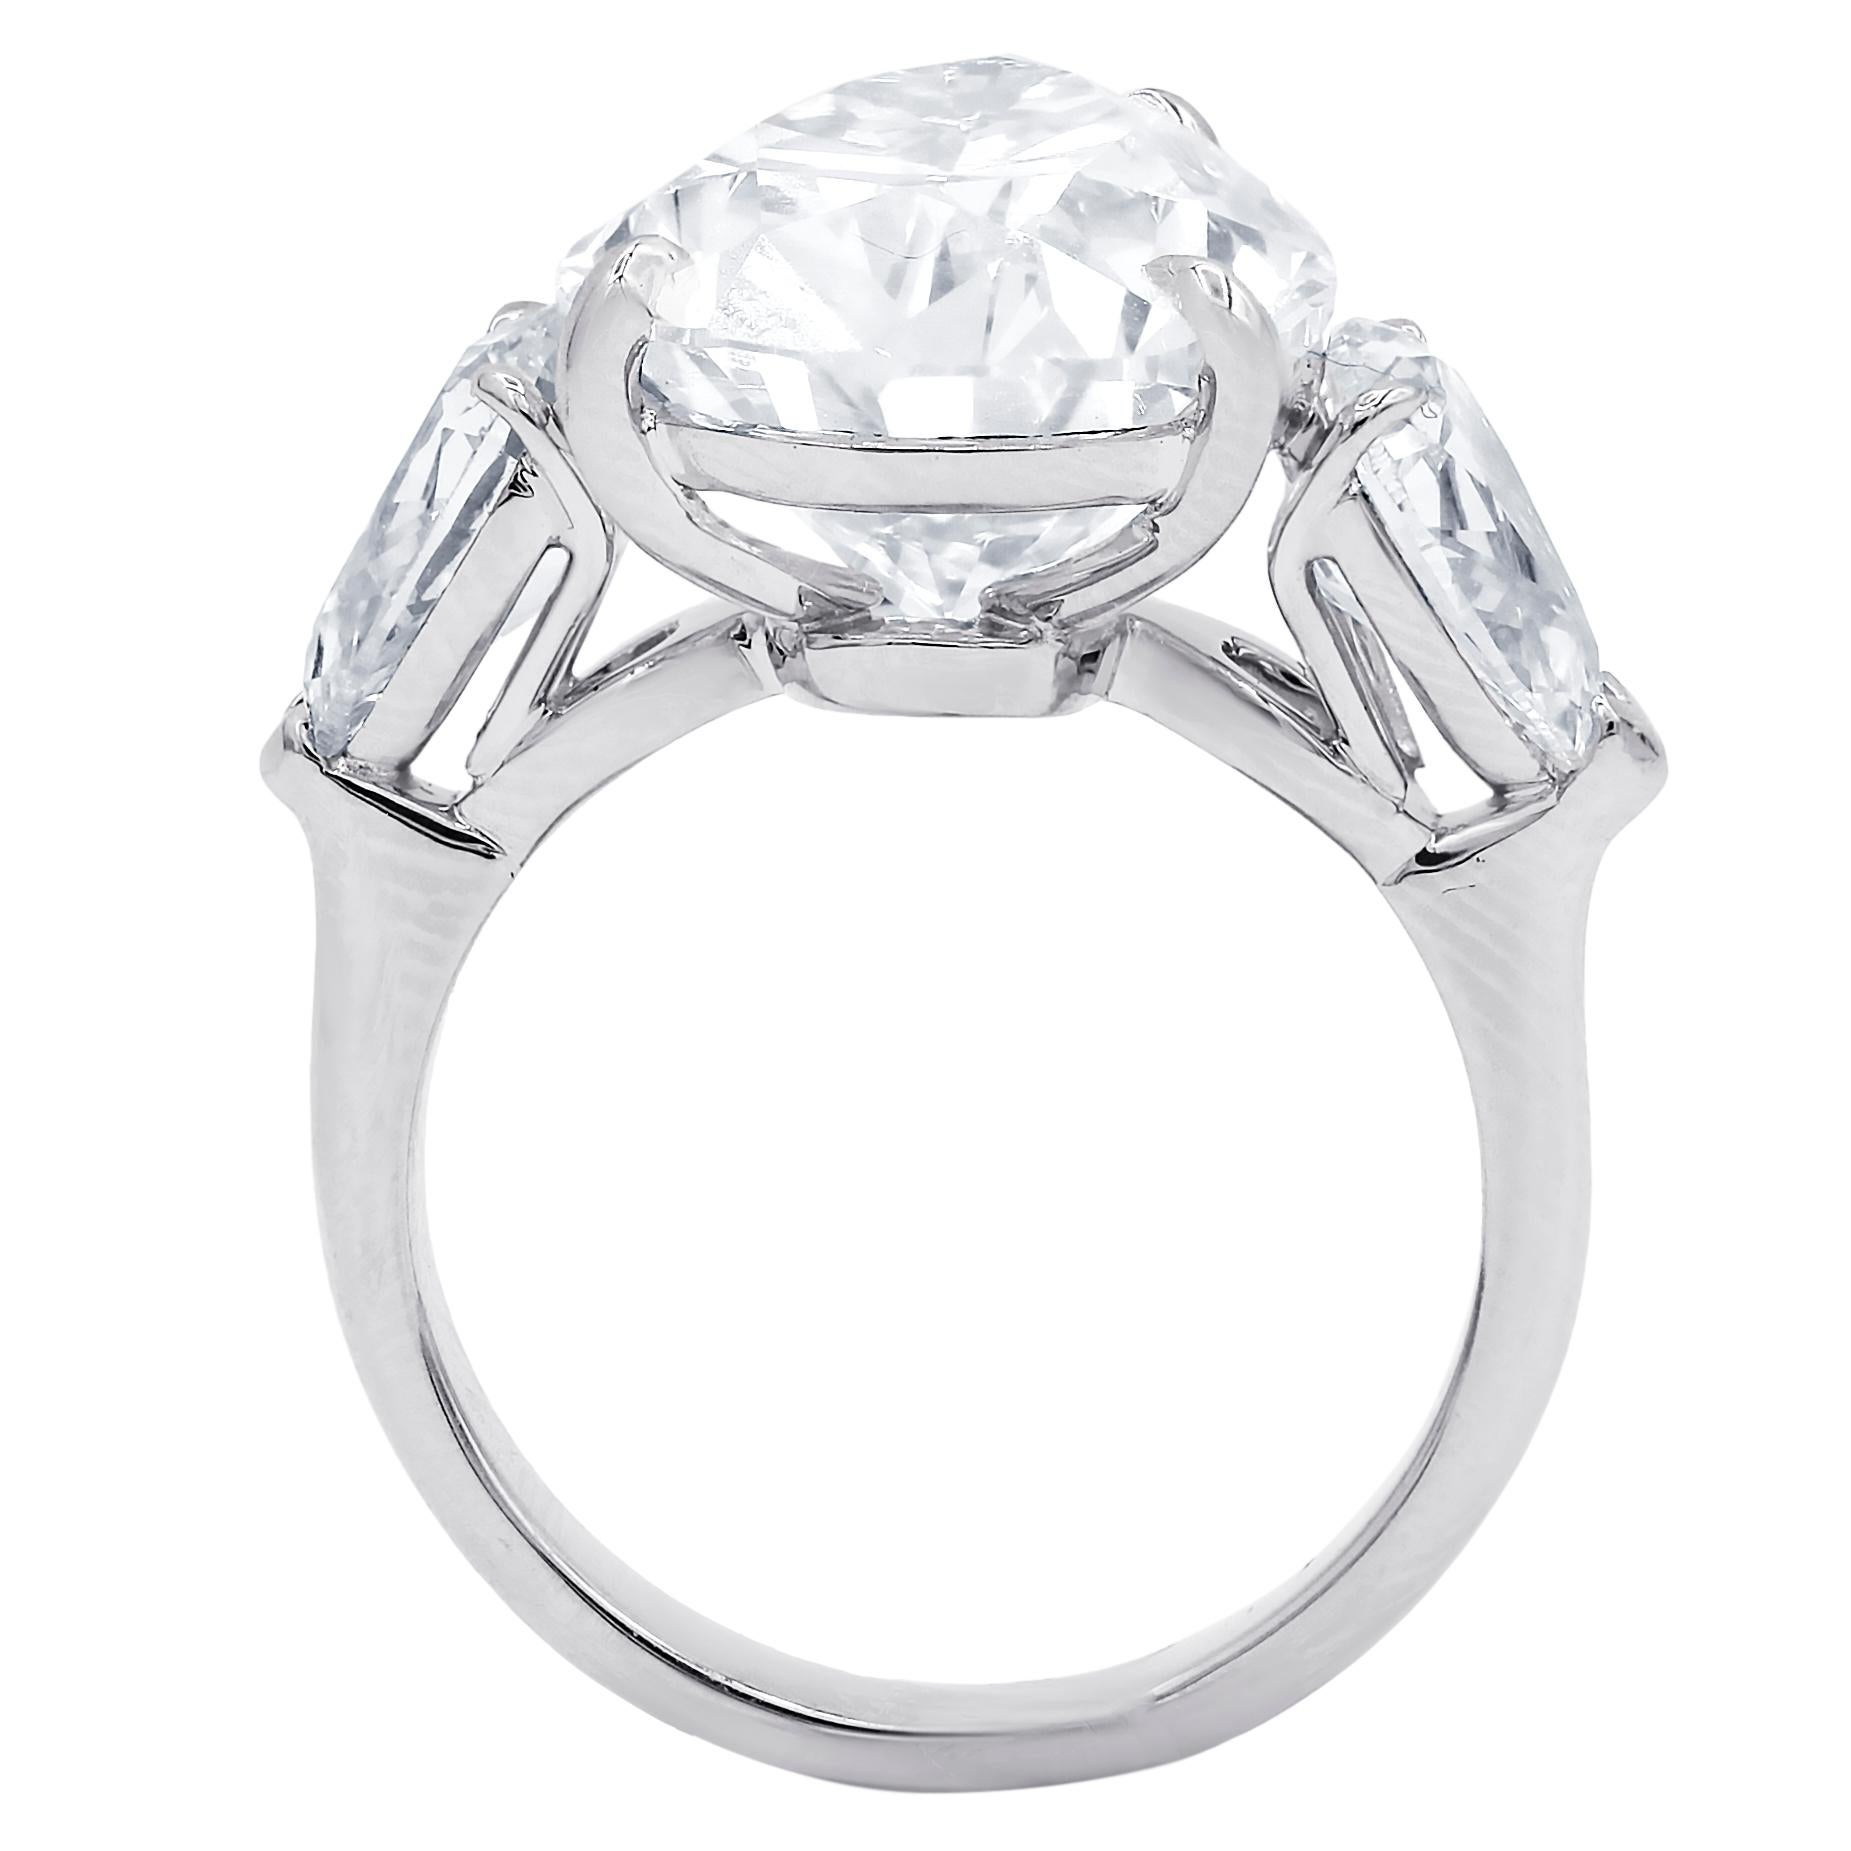 GIA Certified 4.05 Carat Pear Cut Diamond Ring